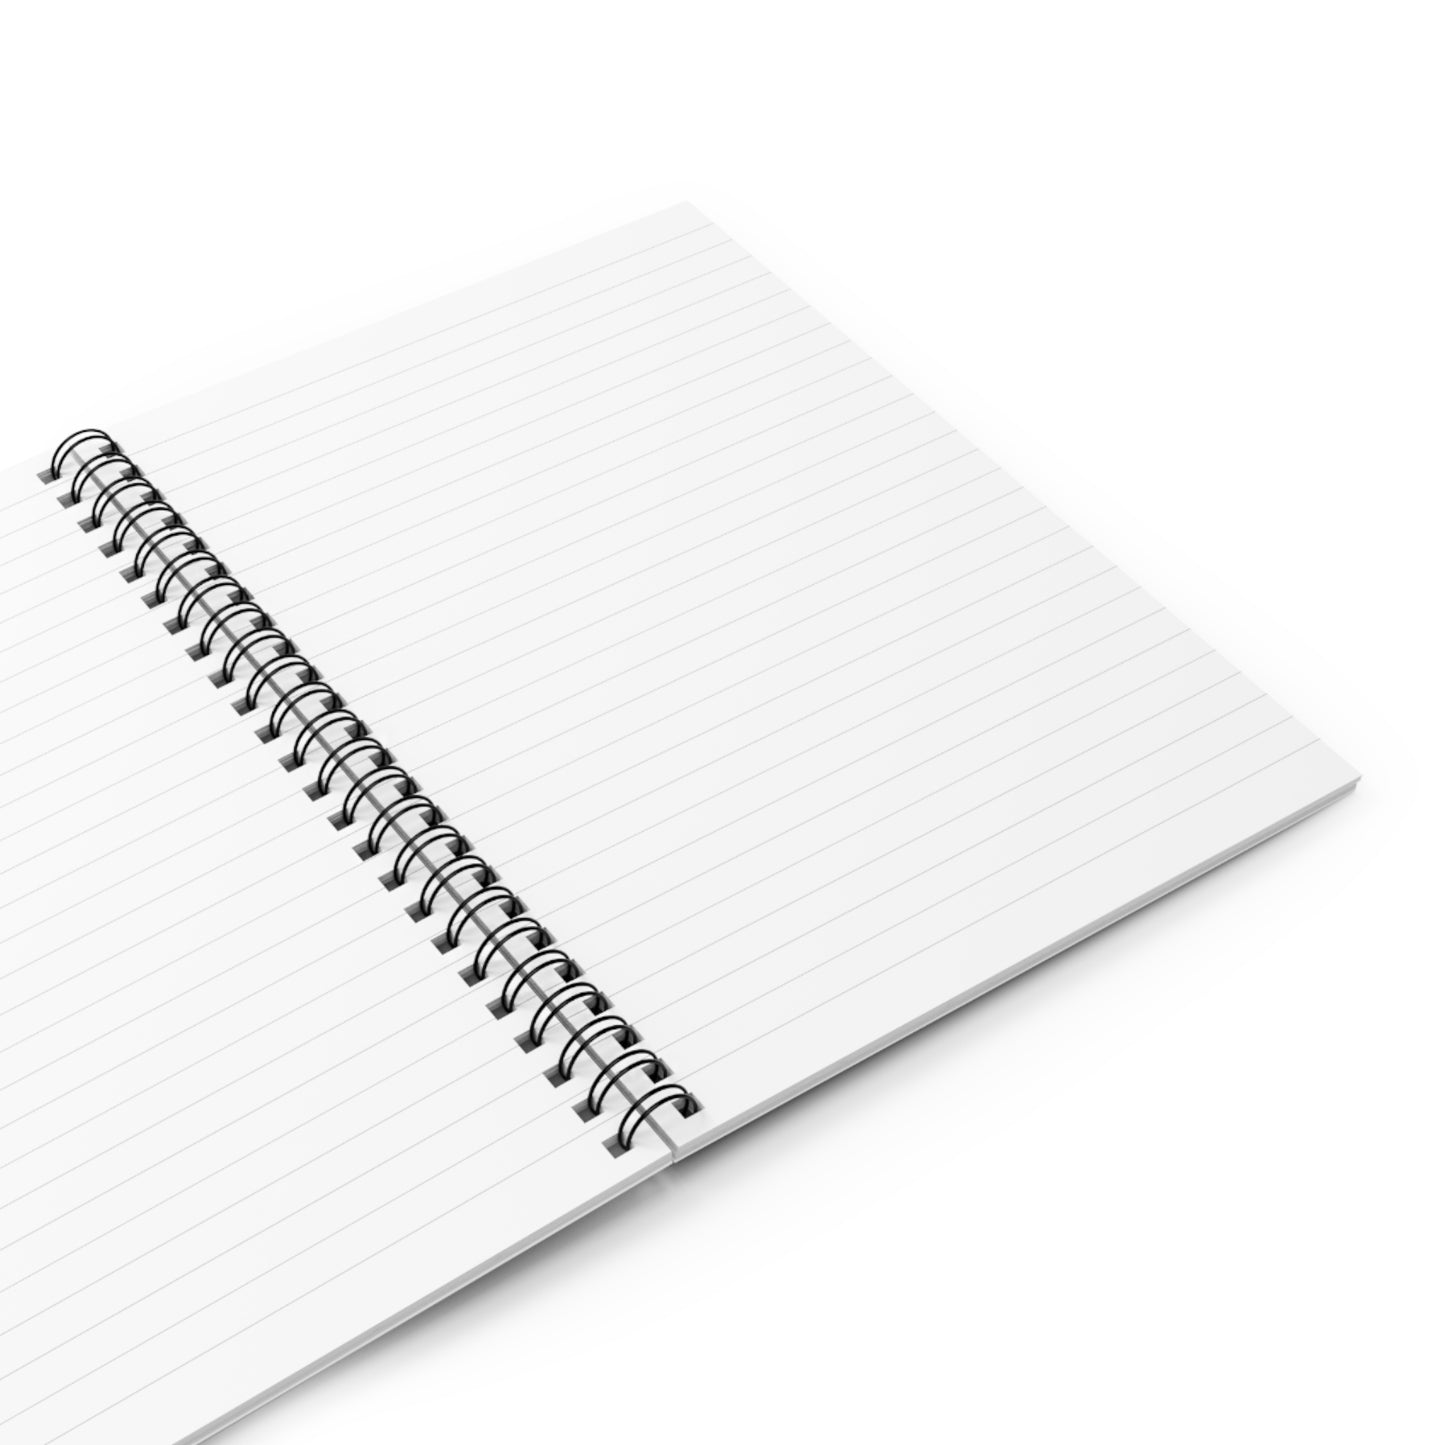 Spellbound Spiral Notebook - Ruled Line